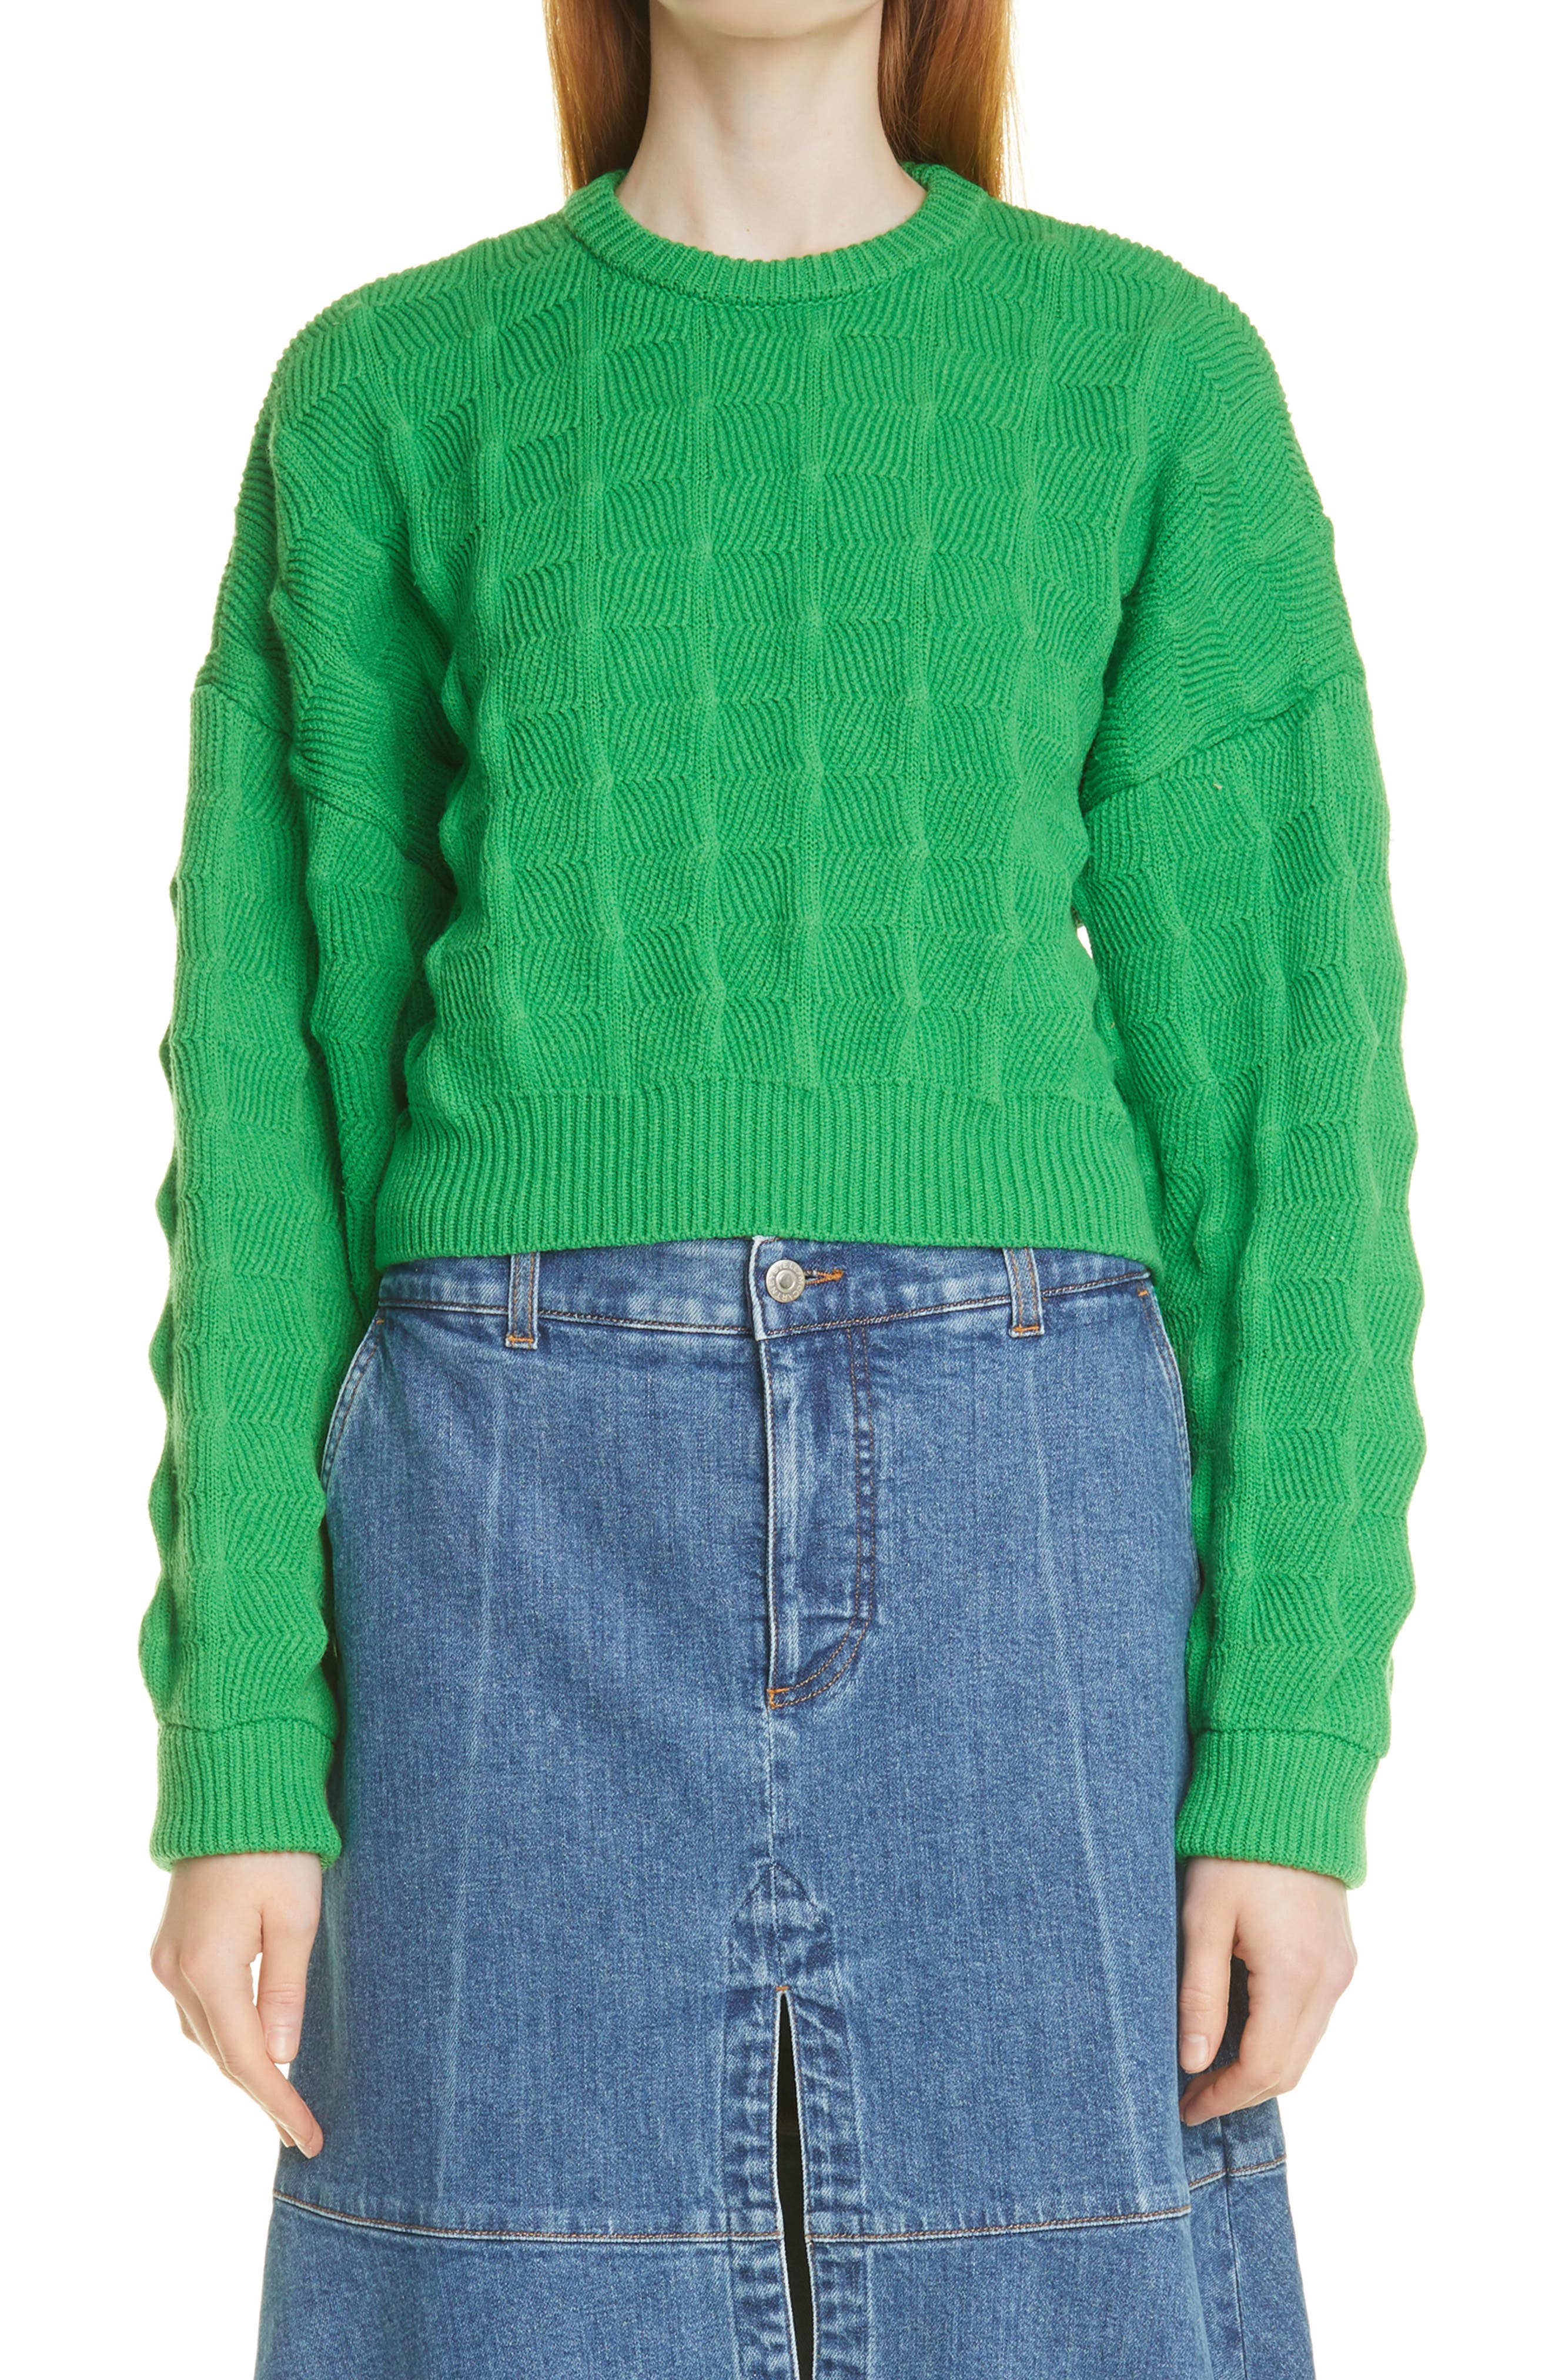 Stella McCartney Popcorn Texture Crop Virgin Wool Sweater in Bright Green